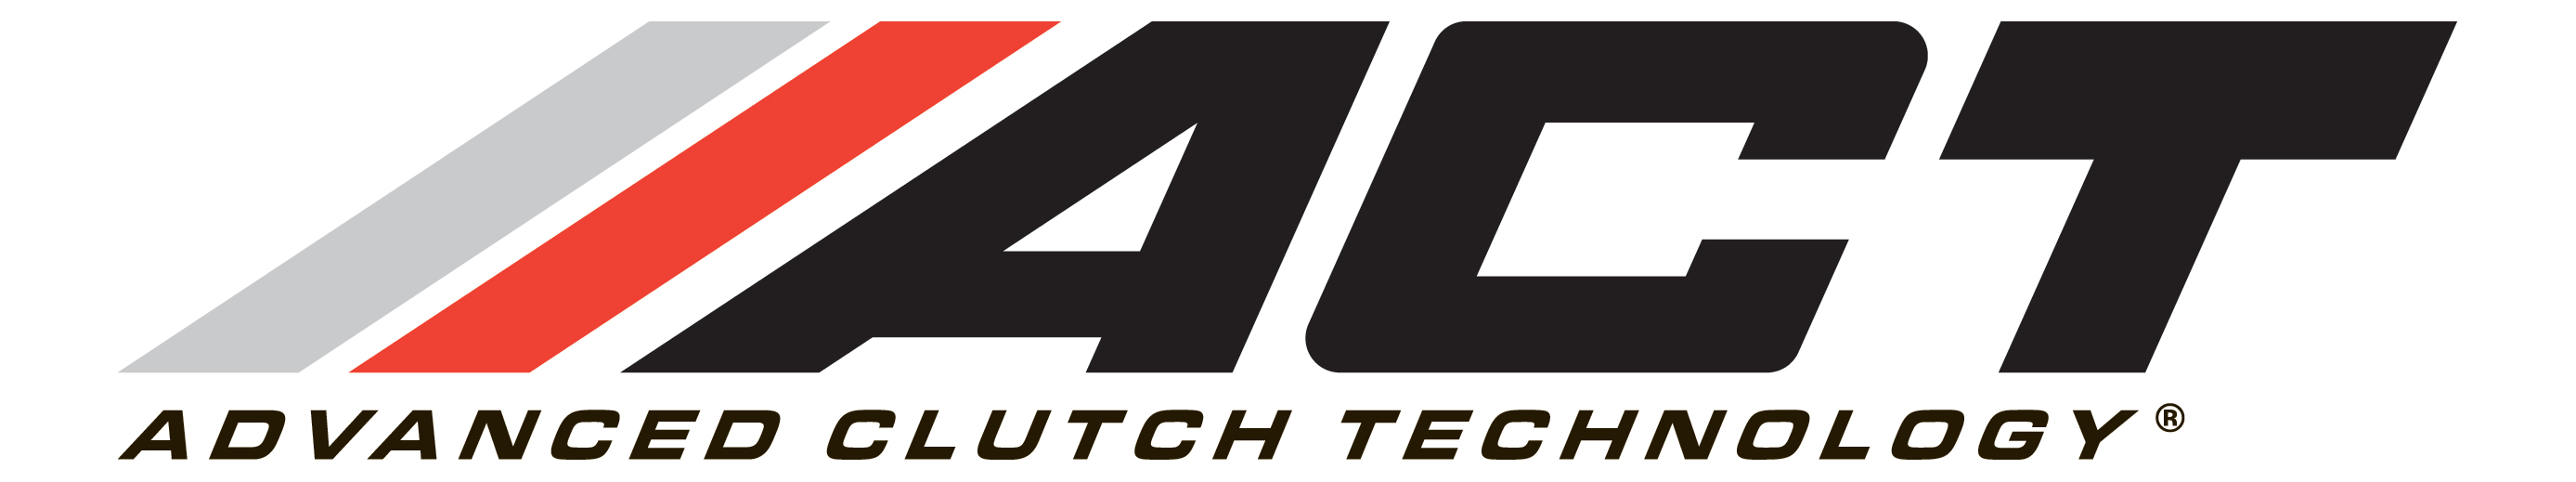 act-logo-white.jpg